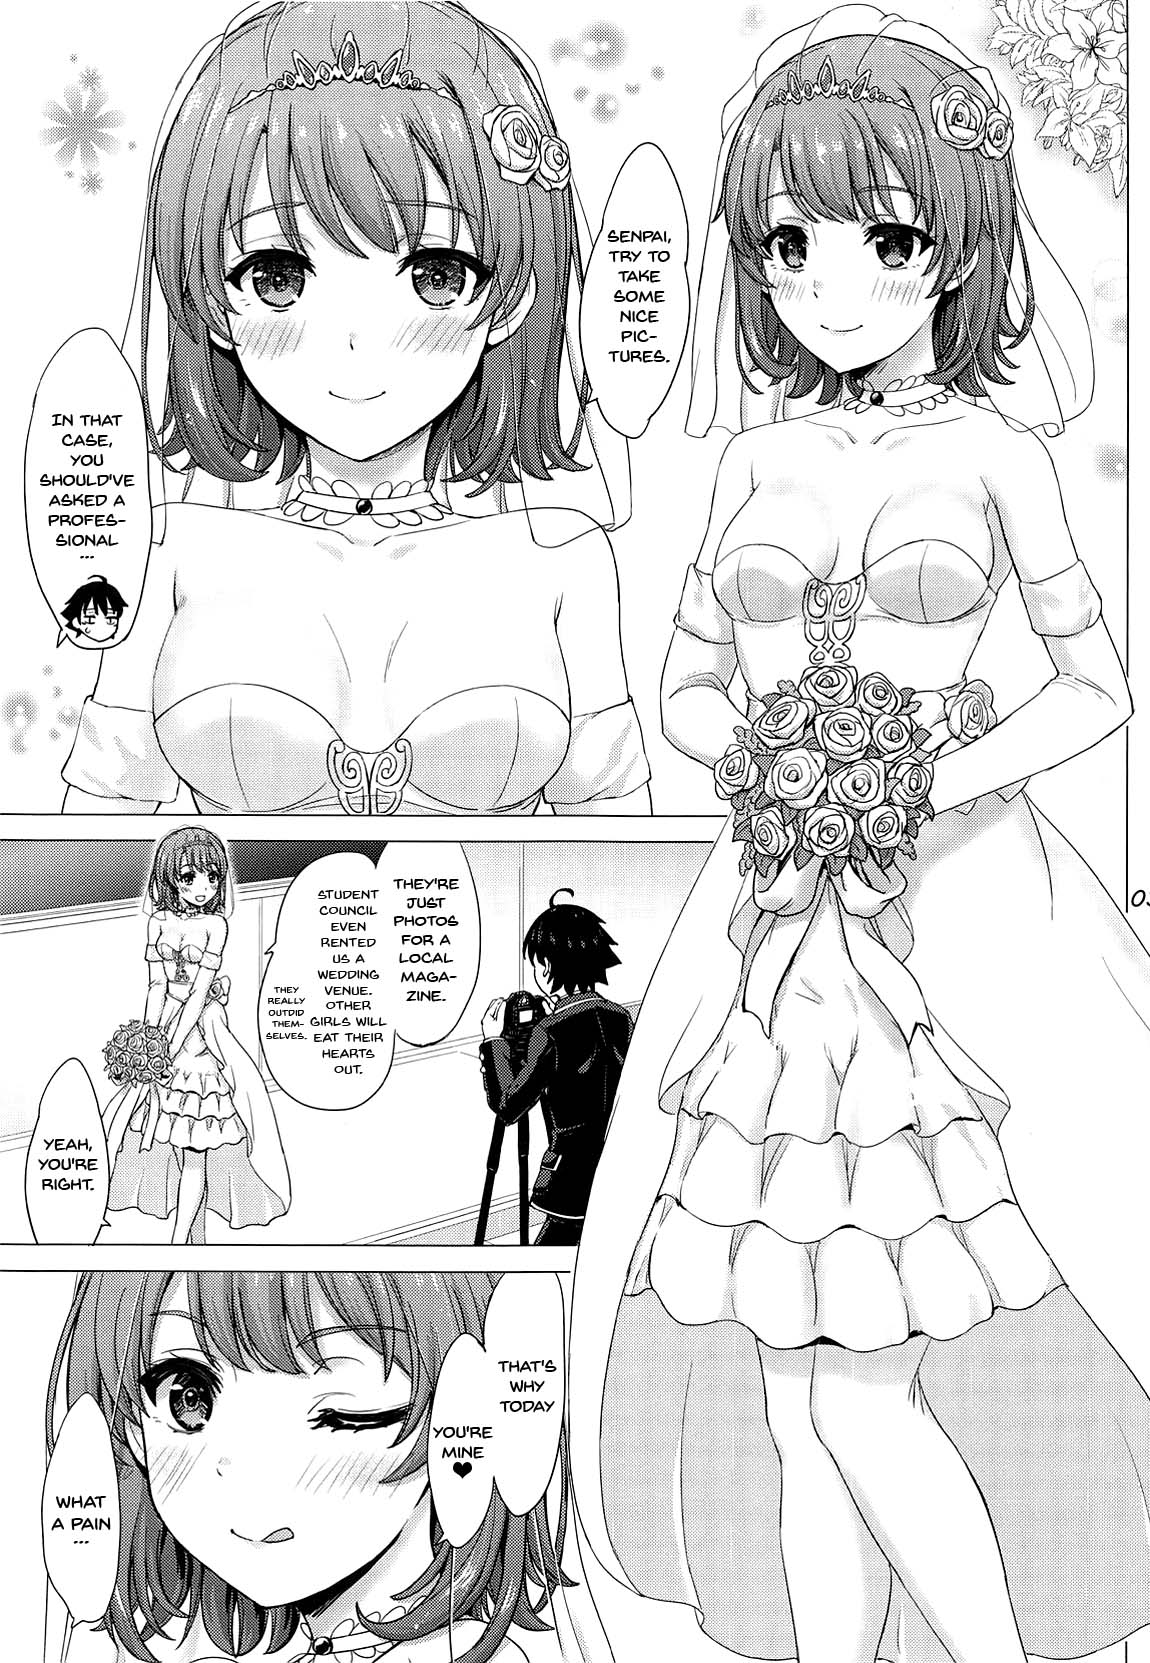 Wedding Irohasu! - Iroha's gonna marry you after today's scholl! - Foto 2